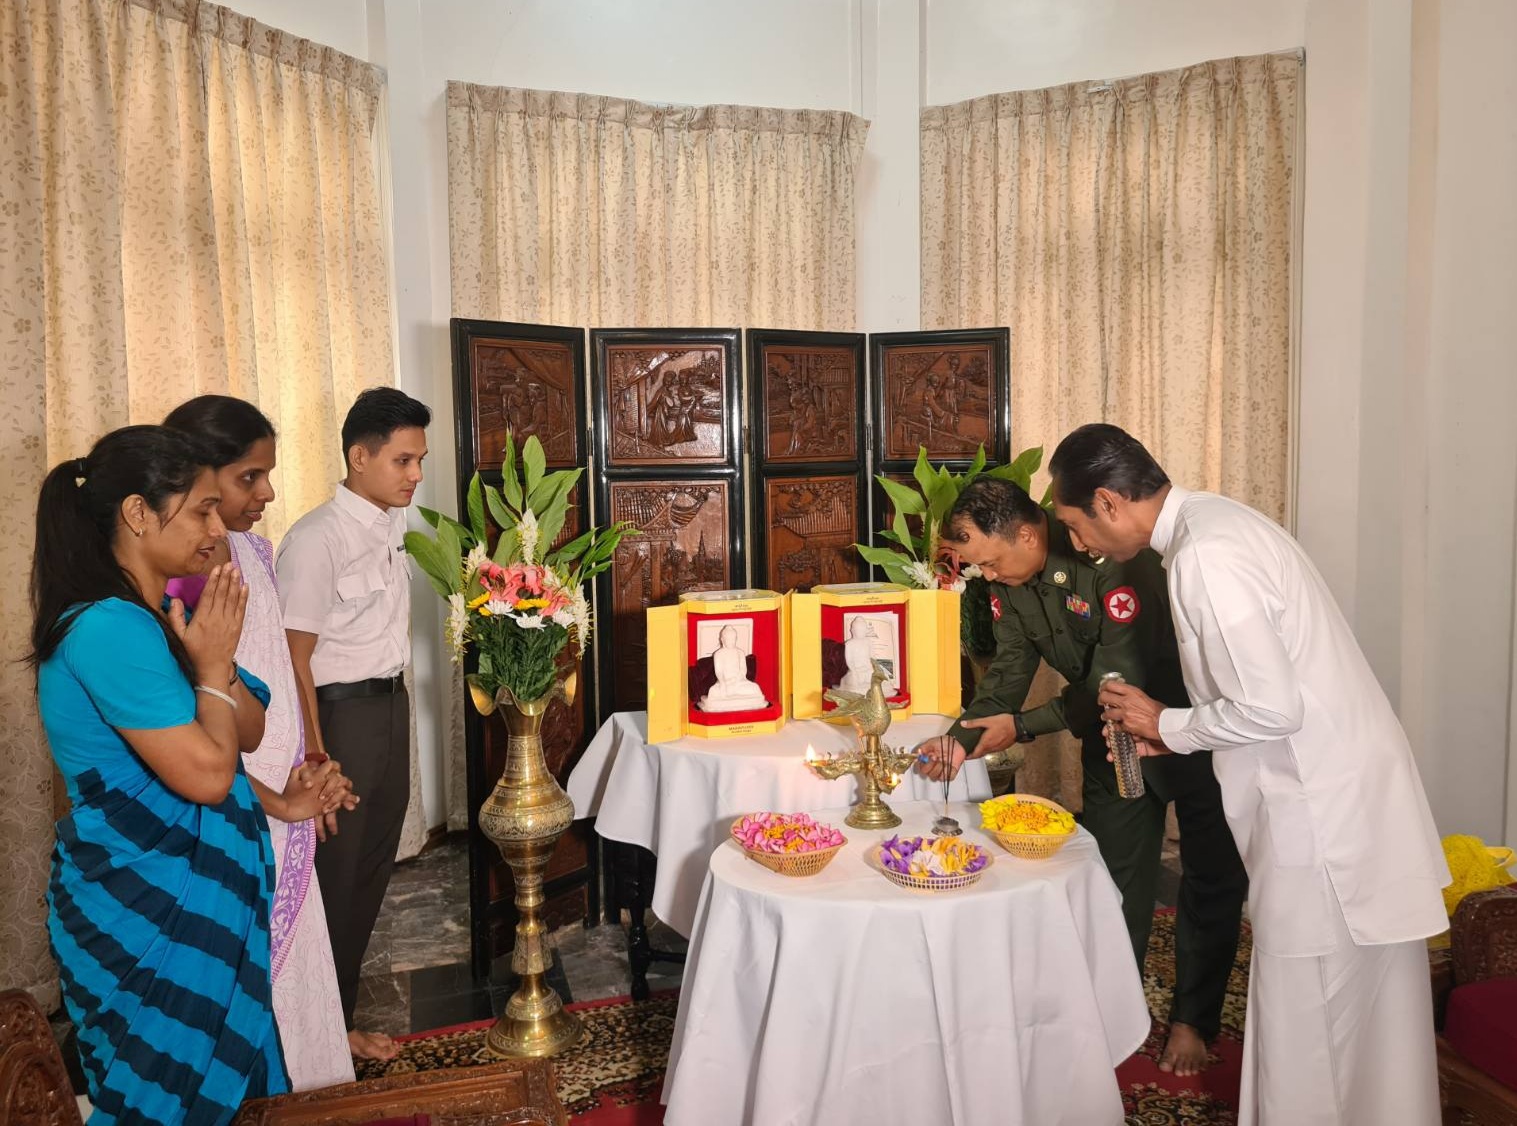 Myanmar Prime Minister presents Marble Replicas of Maravijaya Buddha Statue to the Sri Lankan dignitaries